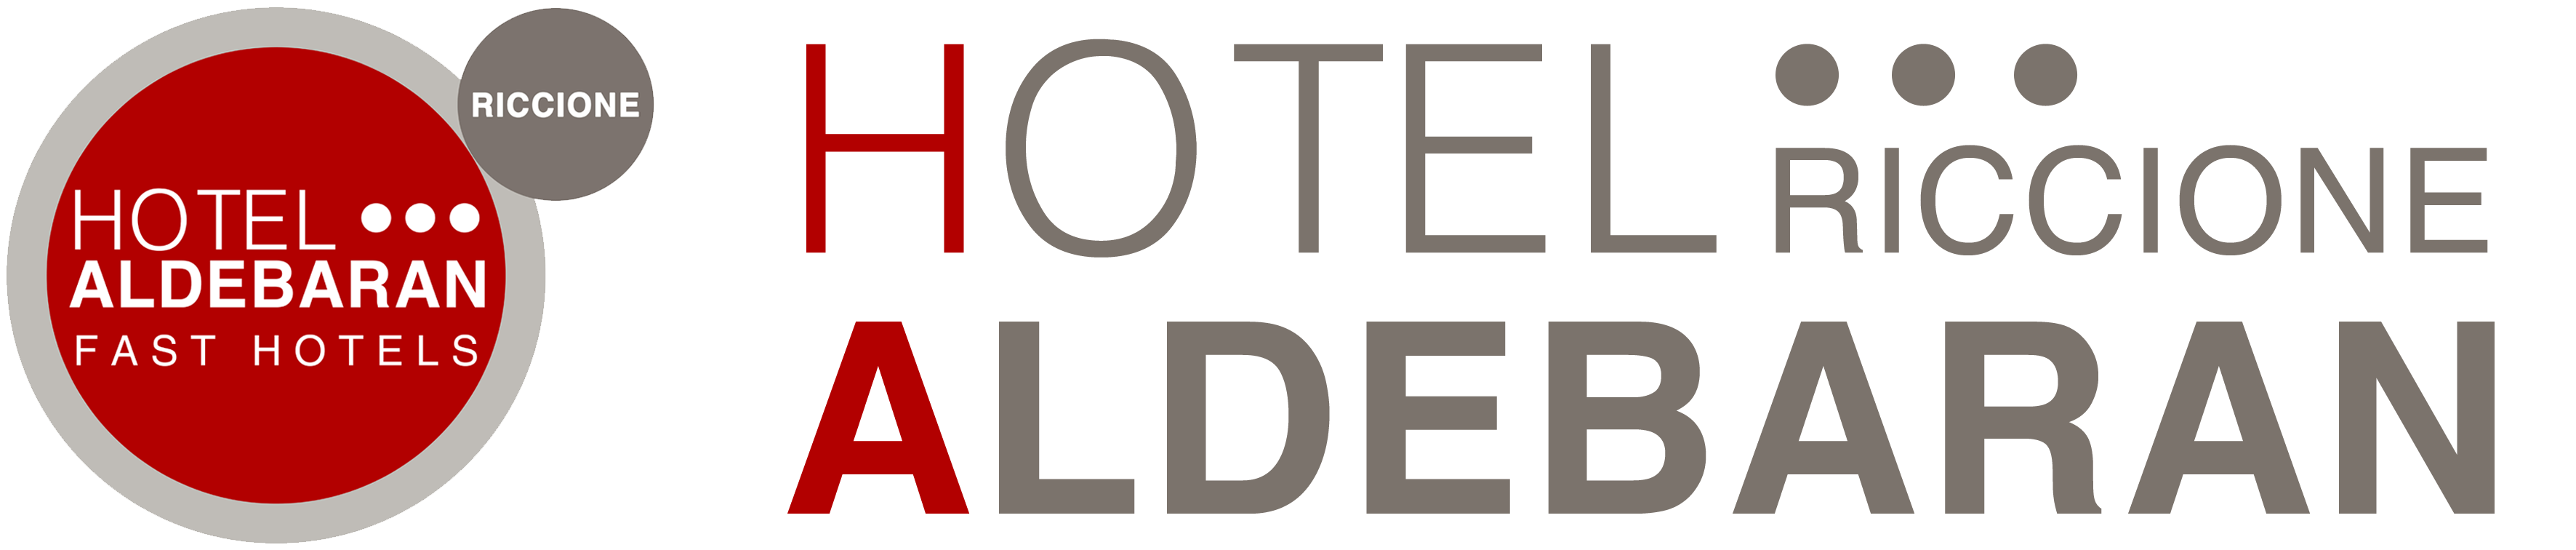 HOTEL ALDEBARAN - RICCIONE